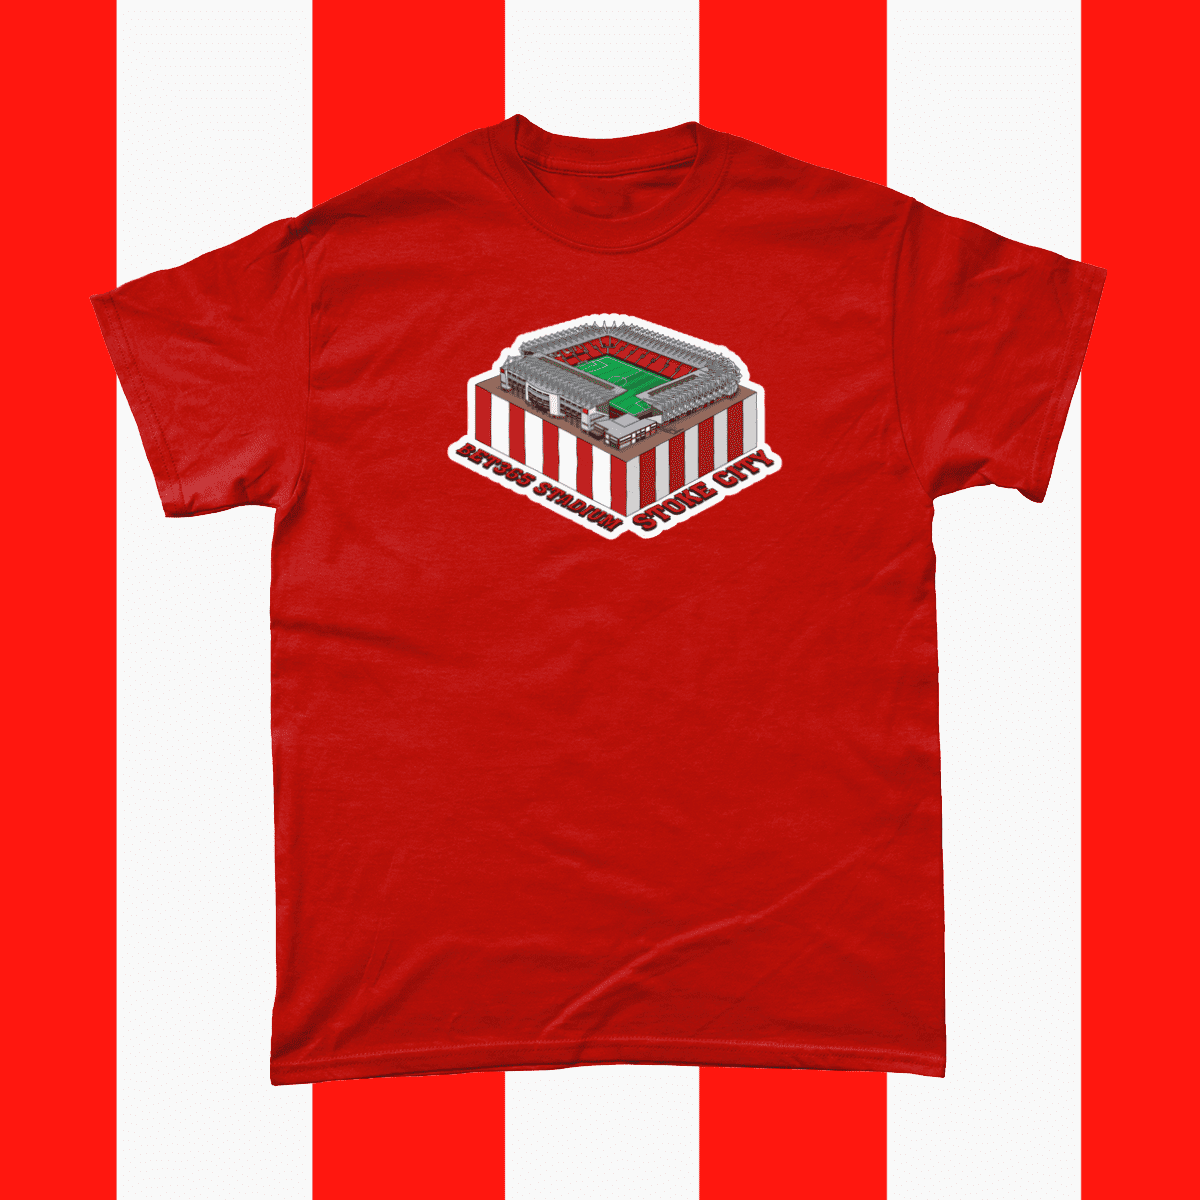 Stoke City Bet365 Stadium Football Illustration Men's T-Shirt Red